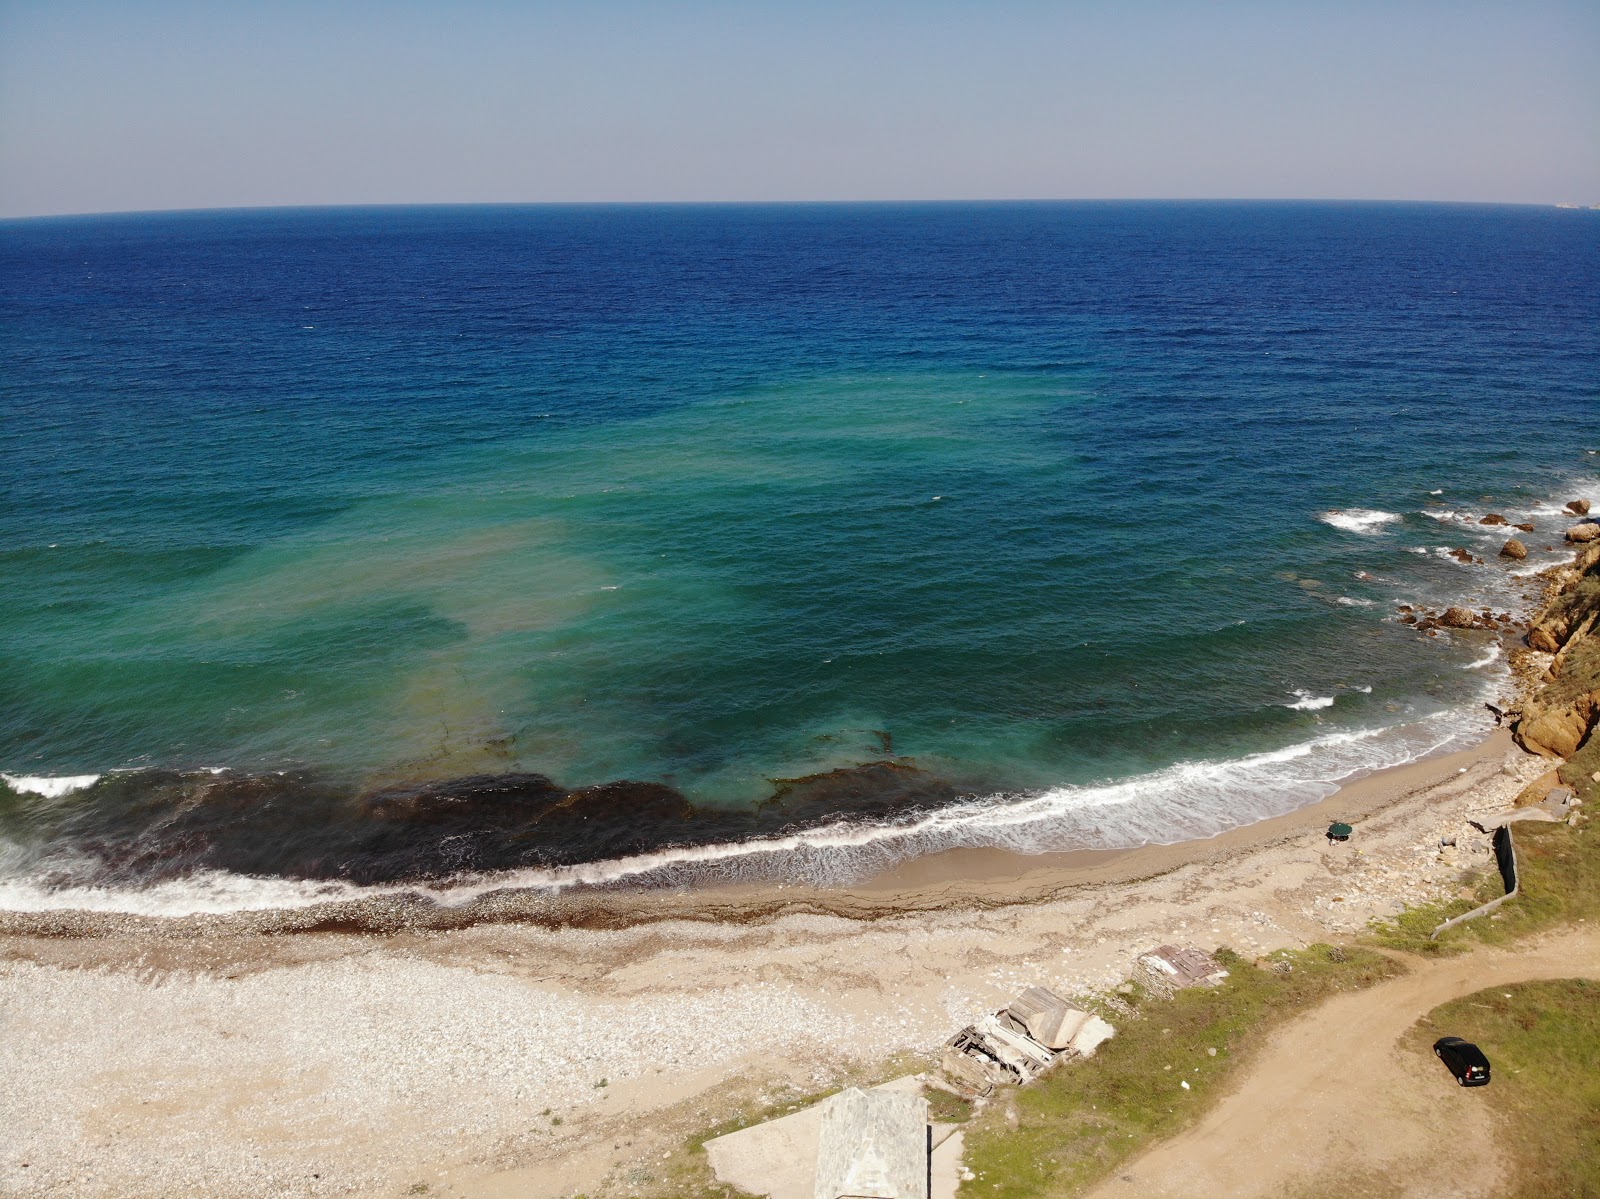 Foto di Theotokos beach ubicato in zona naturale